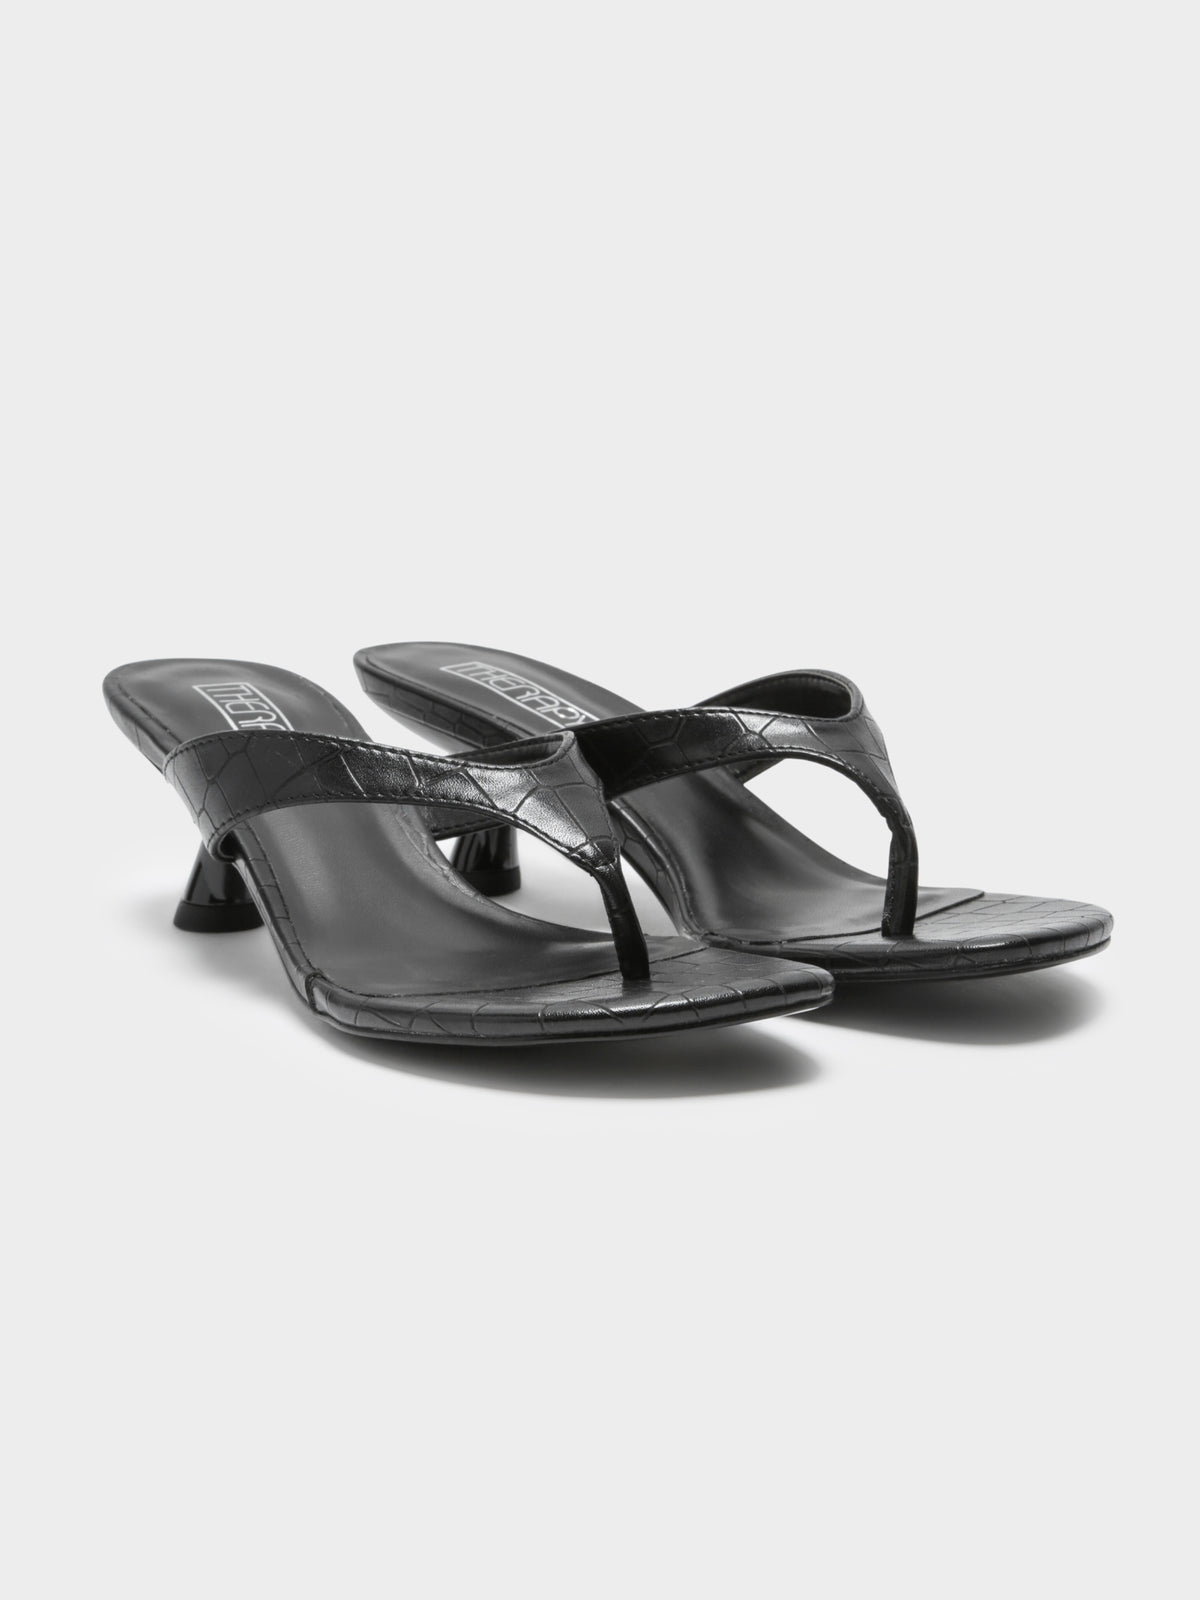 Mici Heels in Black Croc